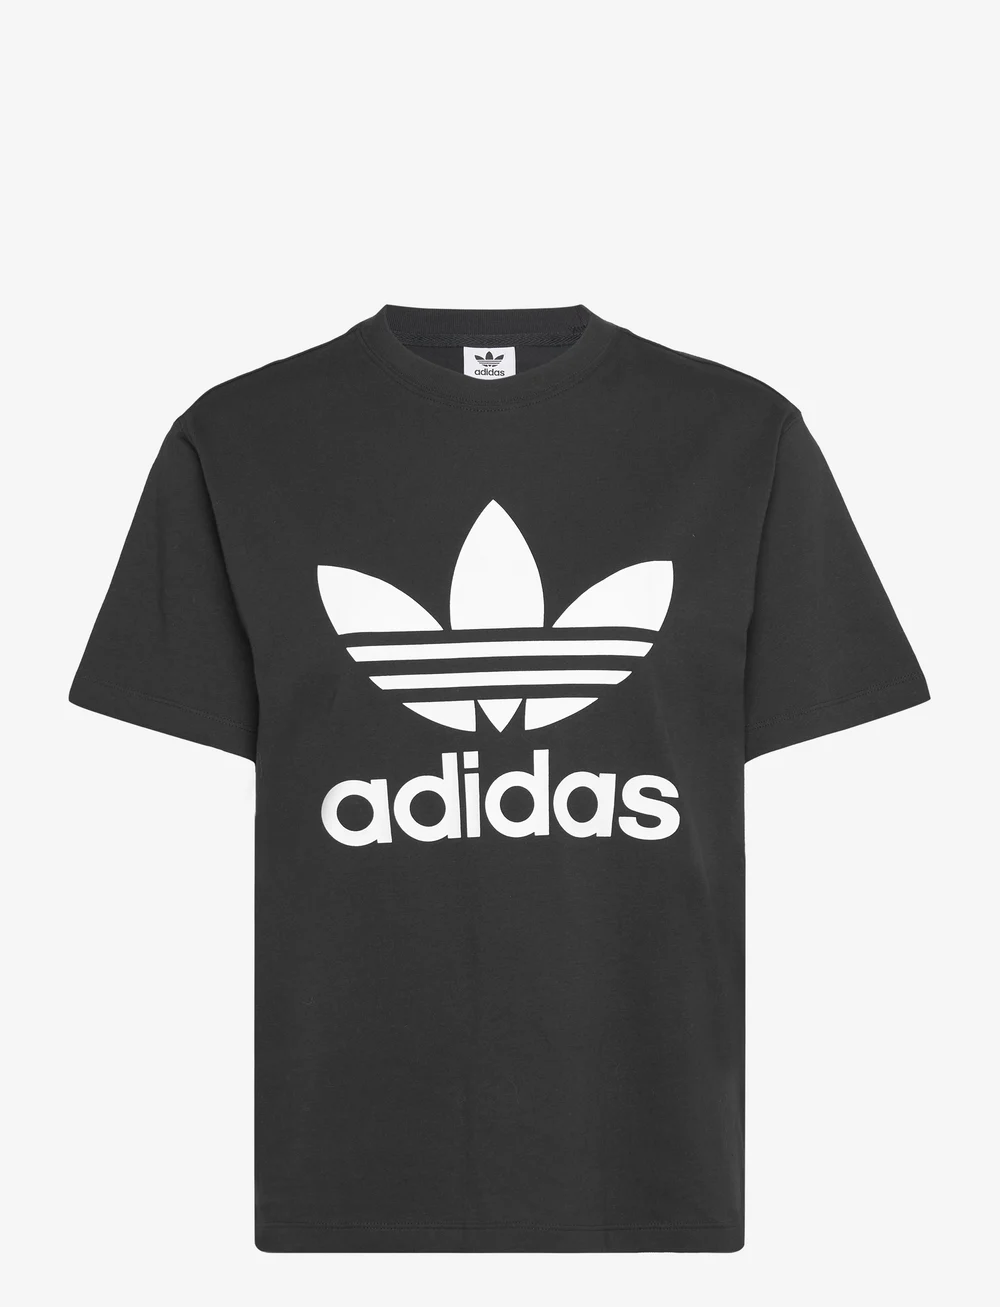 adidas Originals Trefoil Tee - T-shirts